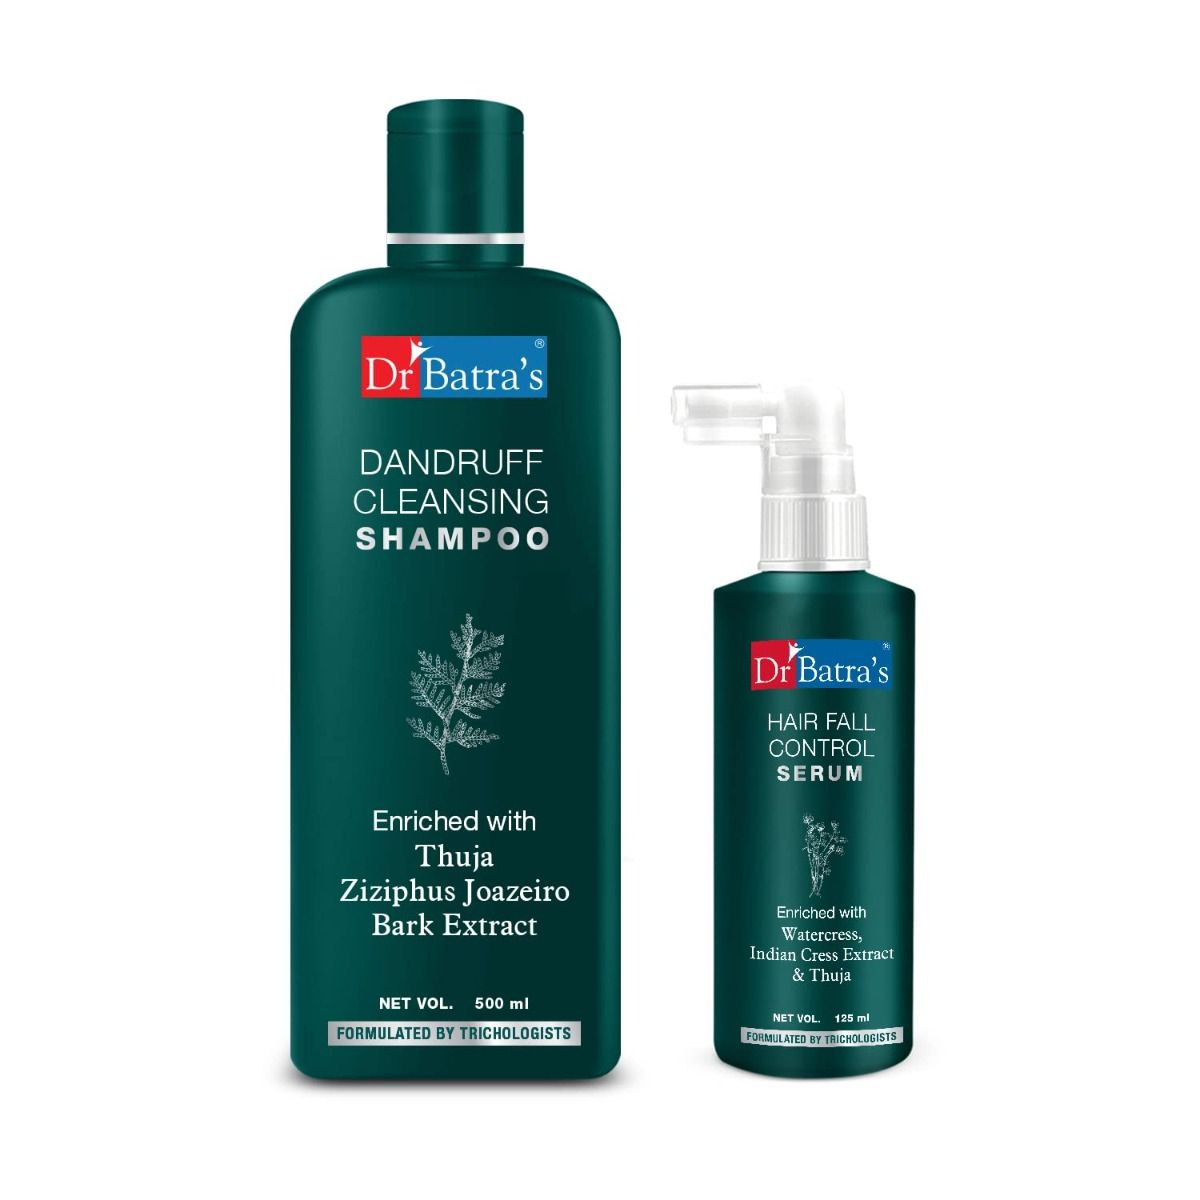     			Dr Batra's Hair Fall Control Serum-125 ml and Dandruff Cleansing Shampoo - 500 ml (Pack of 2)